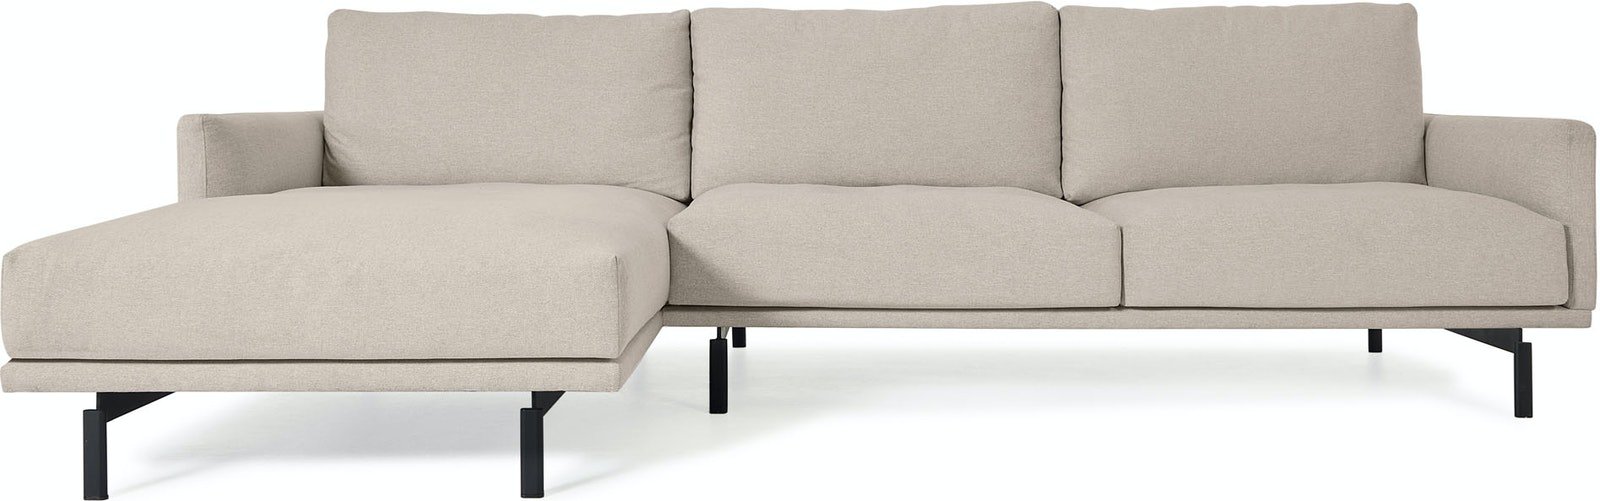 Galene, Venstre chaiselong, 3-personers sofa, moderne, nordisk, polstret by LaForma (H: 94 cm. B: 254 cm. L: 166 cm., Beige)